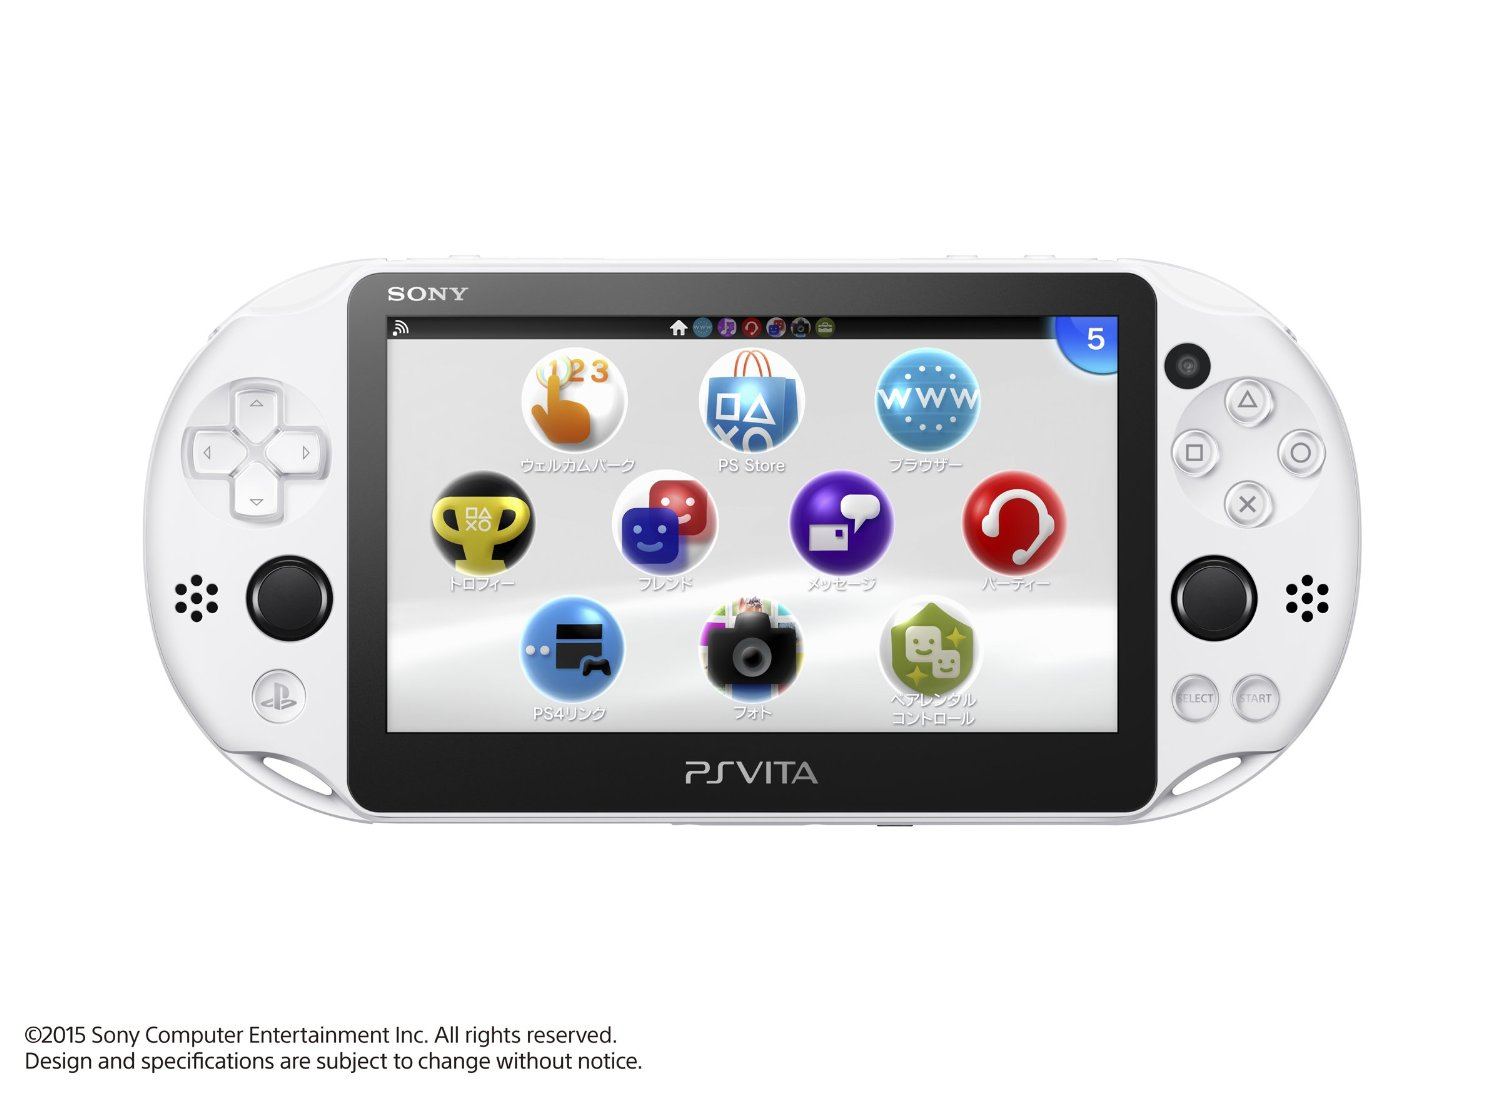 PS Vita PlayStation Vita New Slim Model - PCH-2000 (Glacier White) (Japan)